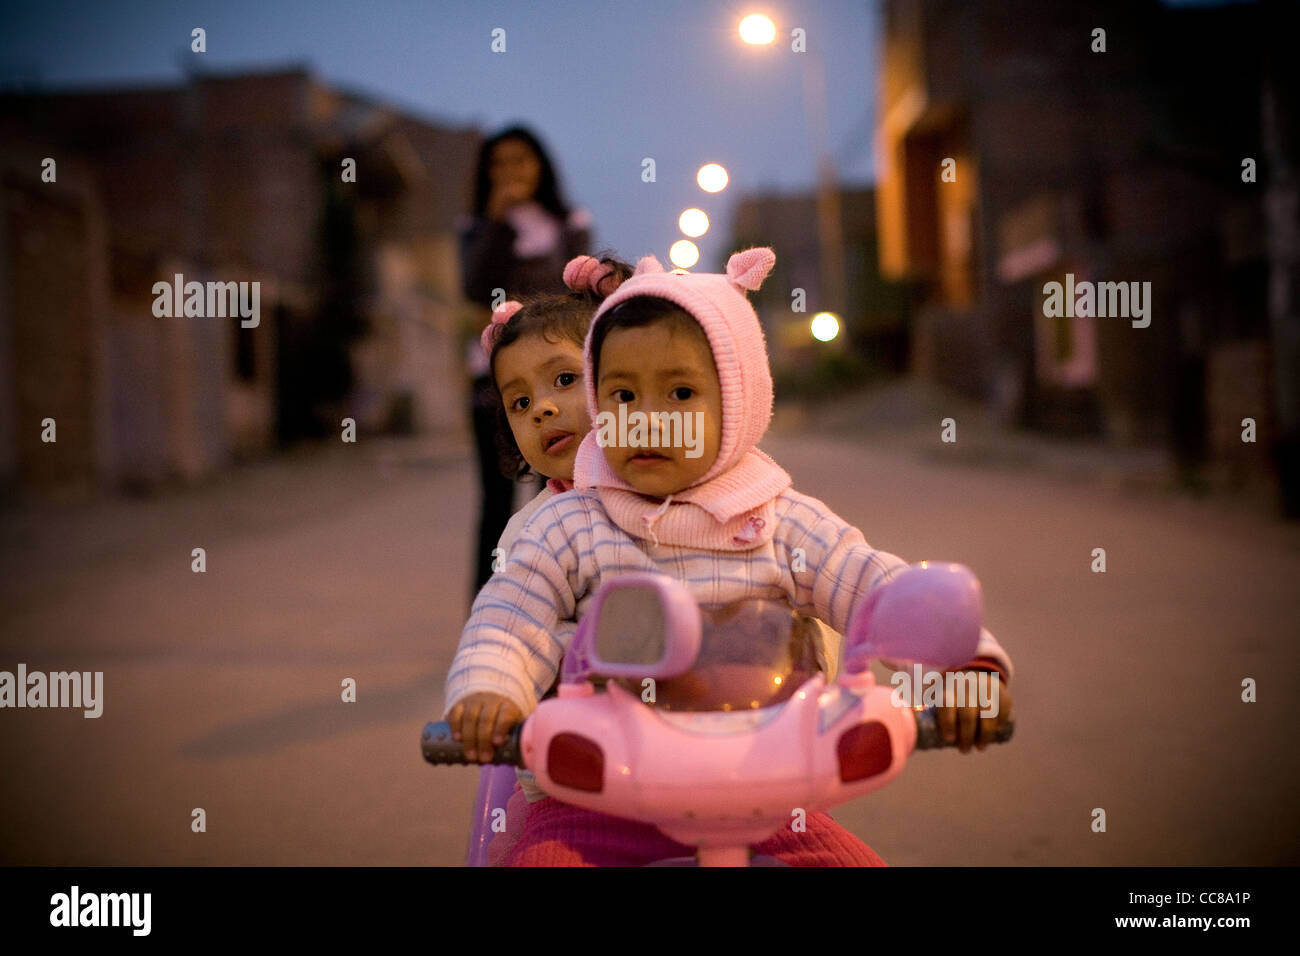 Children play on a small bike in Villa el Salvador - Lima, Peru, South America. Stock Photo